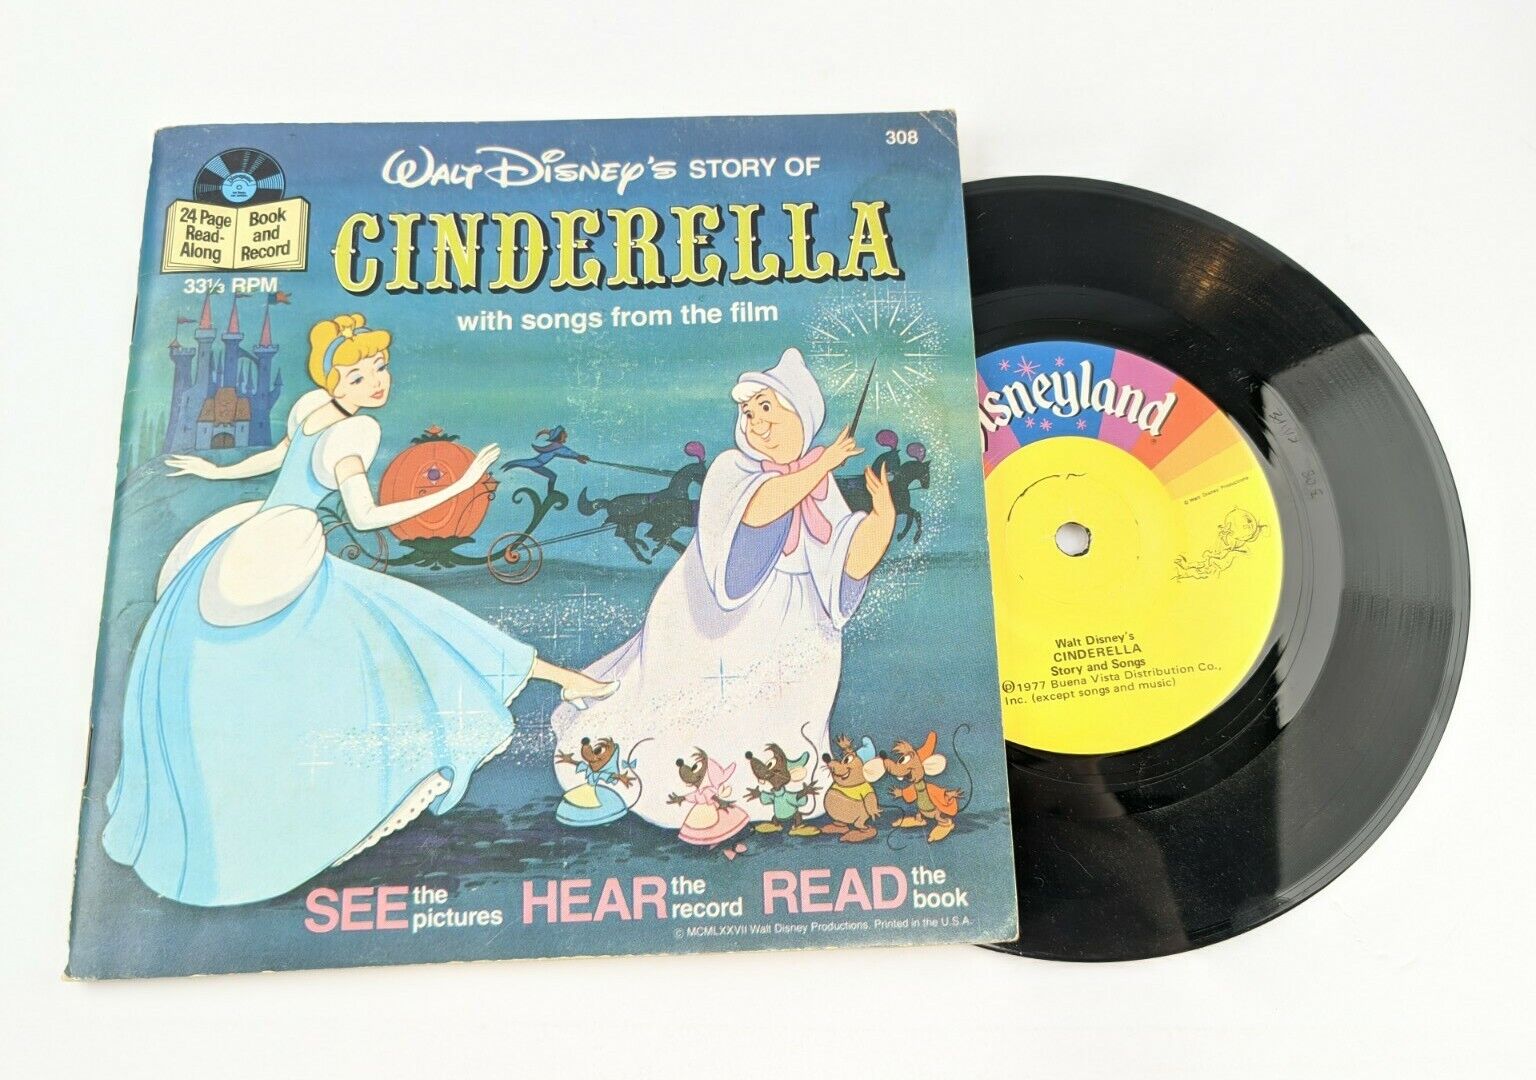 Cinderella Vinyl Record & Book 33 RPM Walt Disney SEE HEAR READ #308